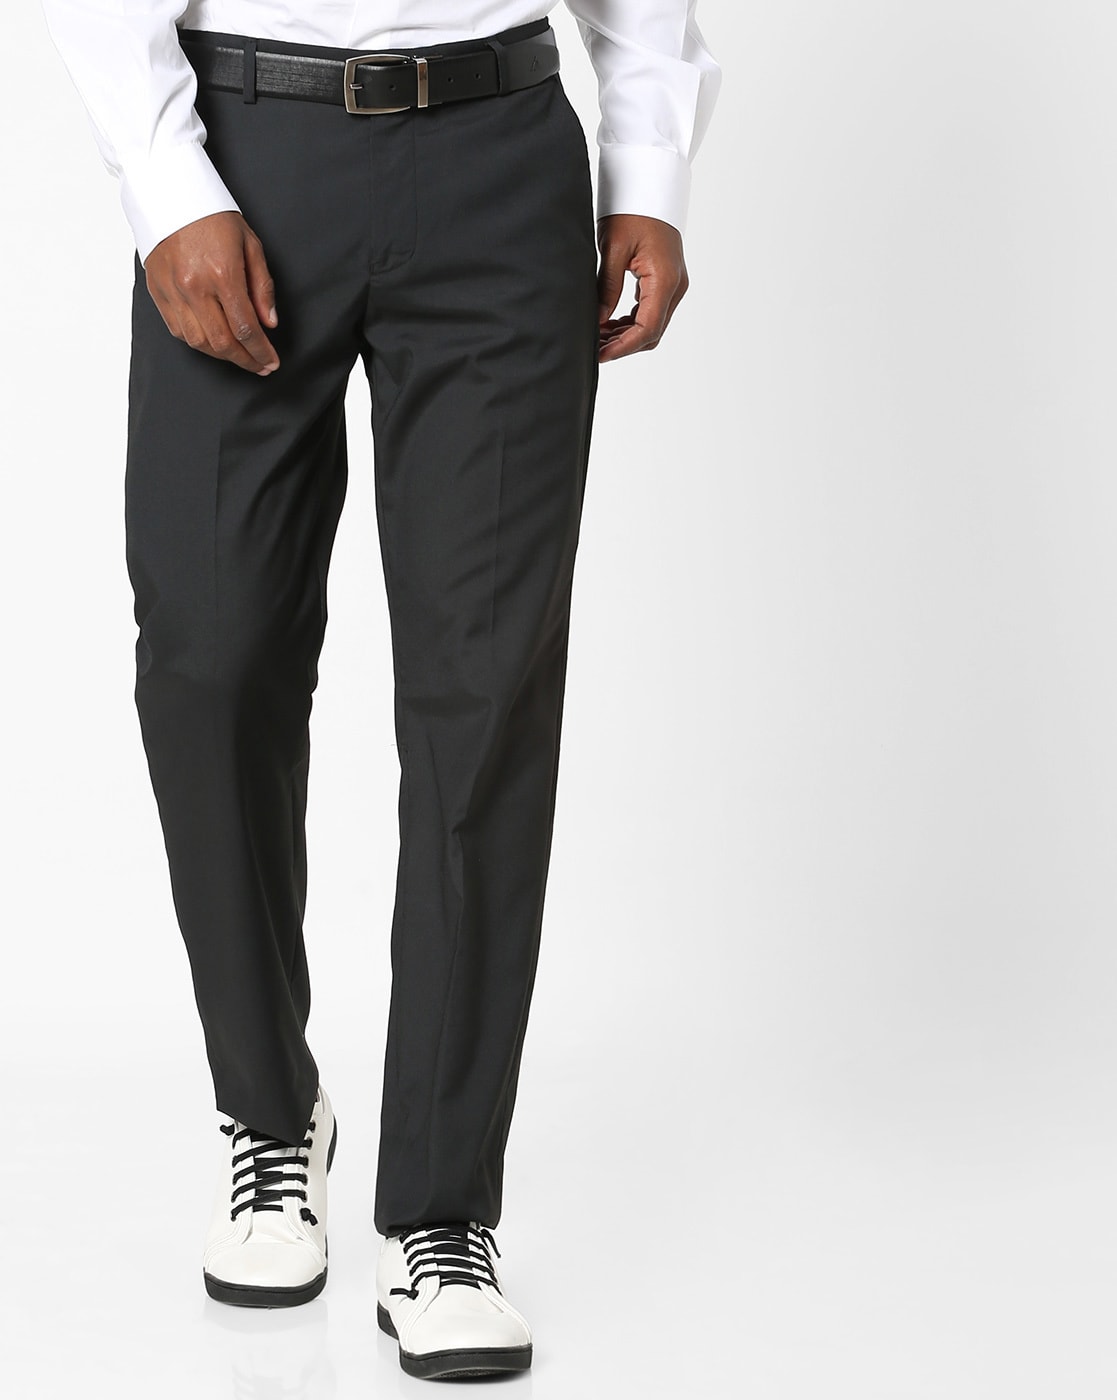 35 Mens Formal Pant style ideas  fashion pants formal pant style formal  pant